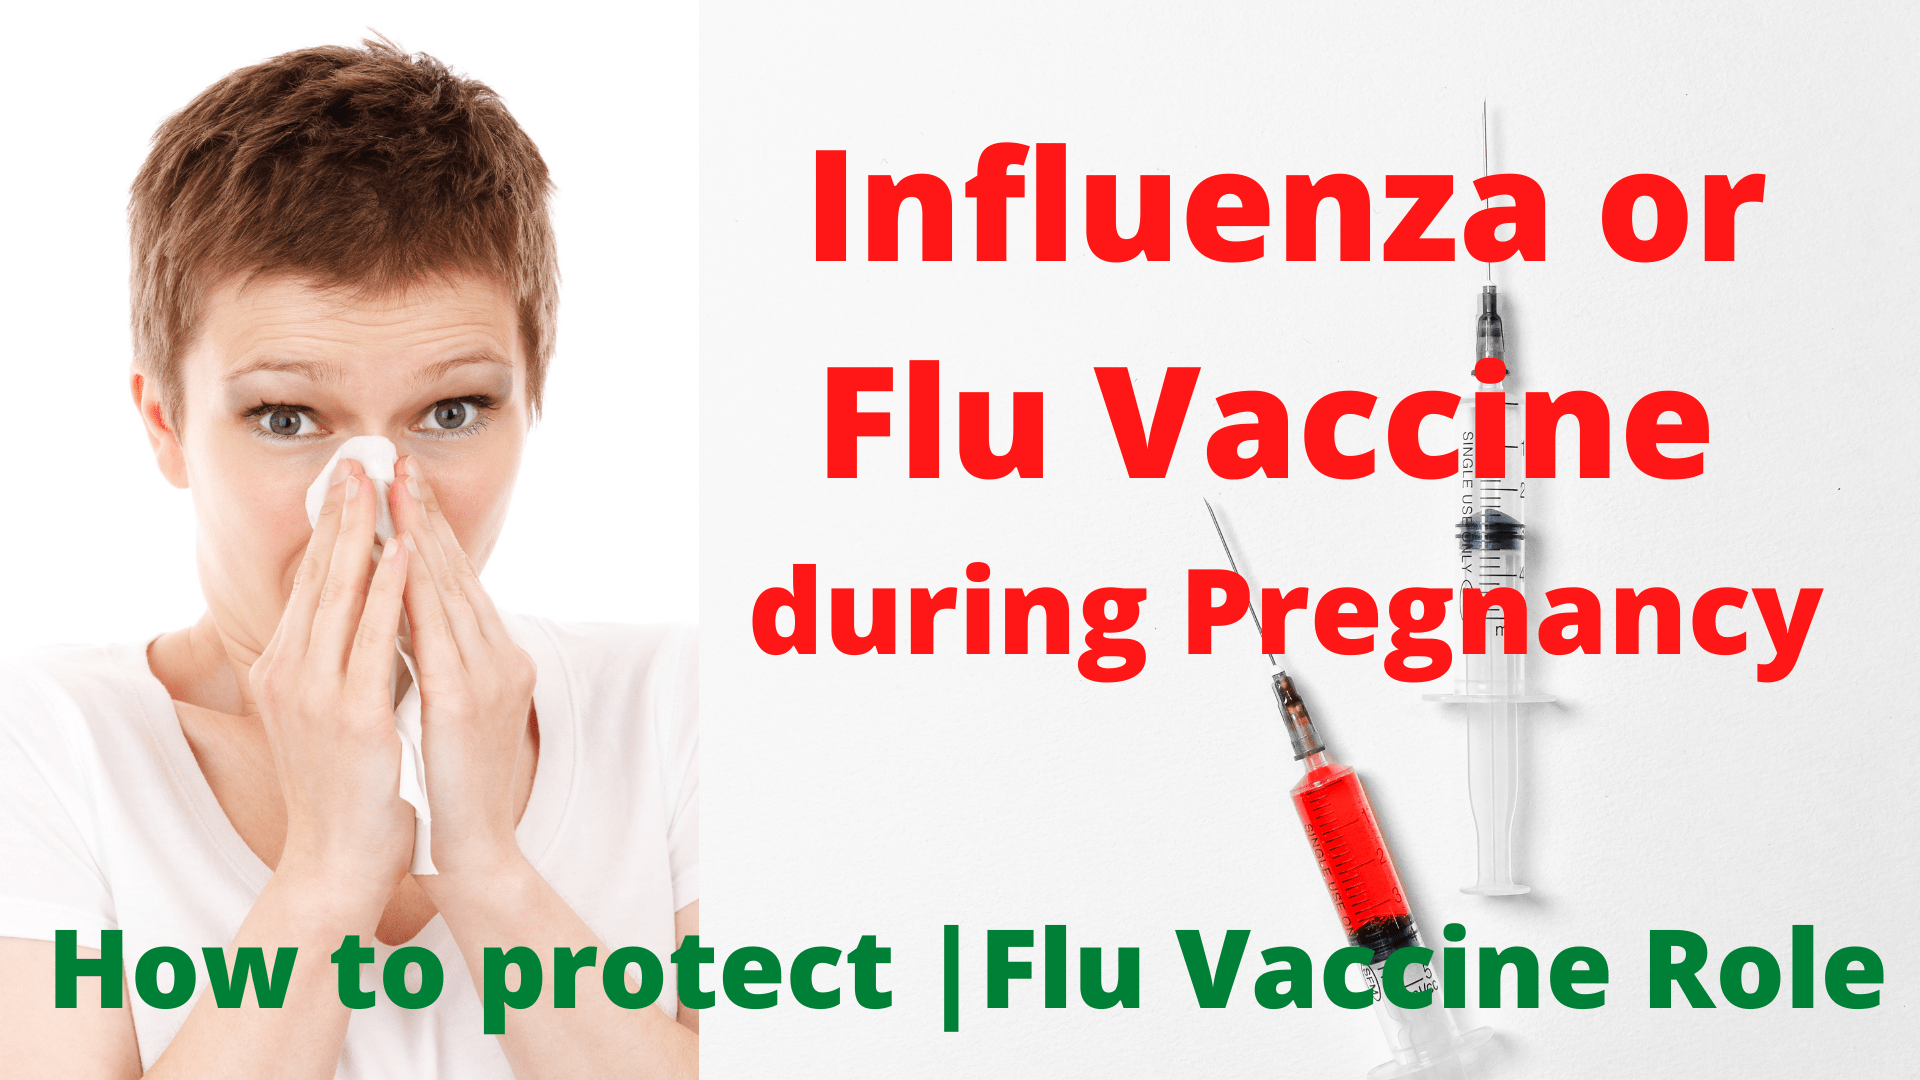 Flu vaccine during Pregnancy